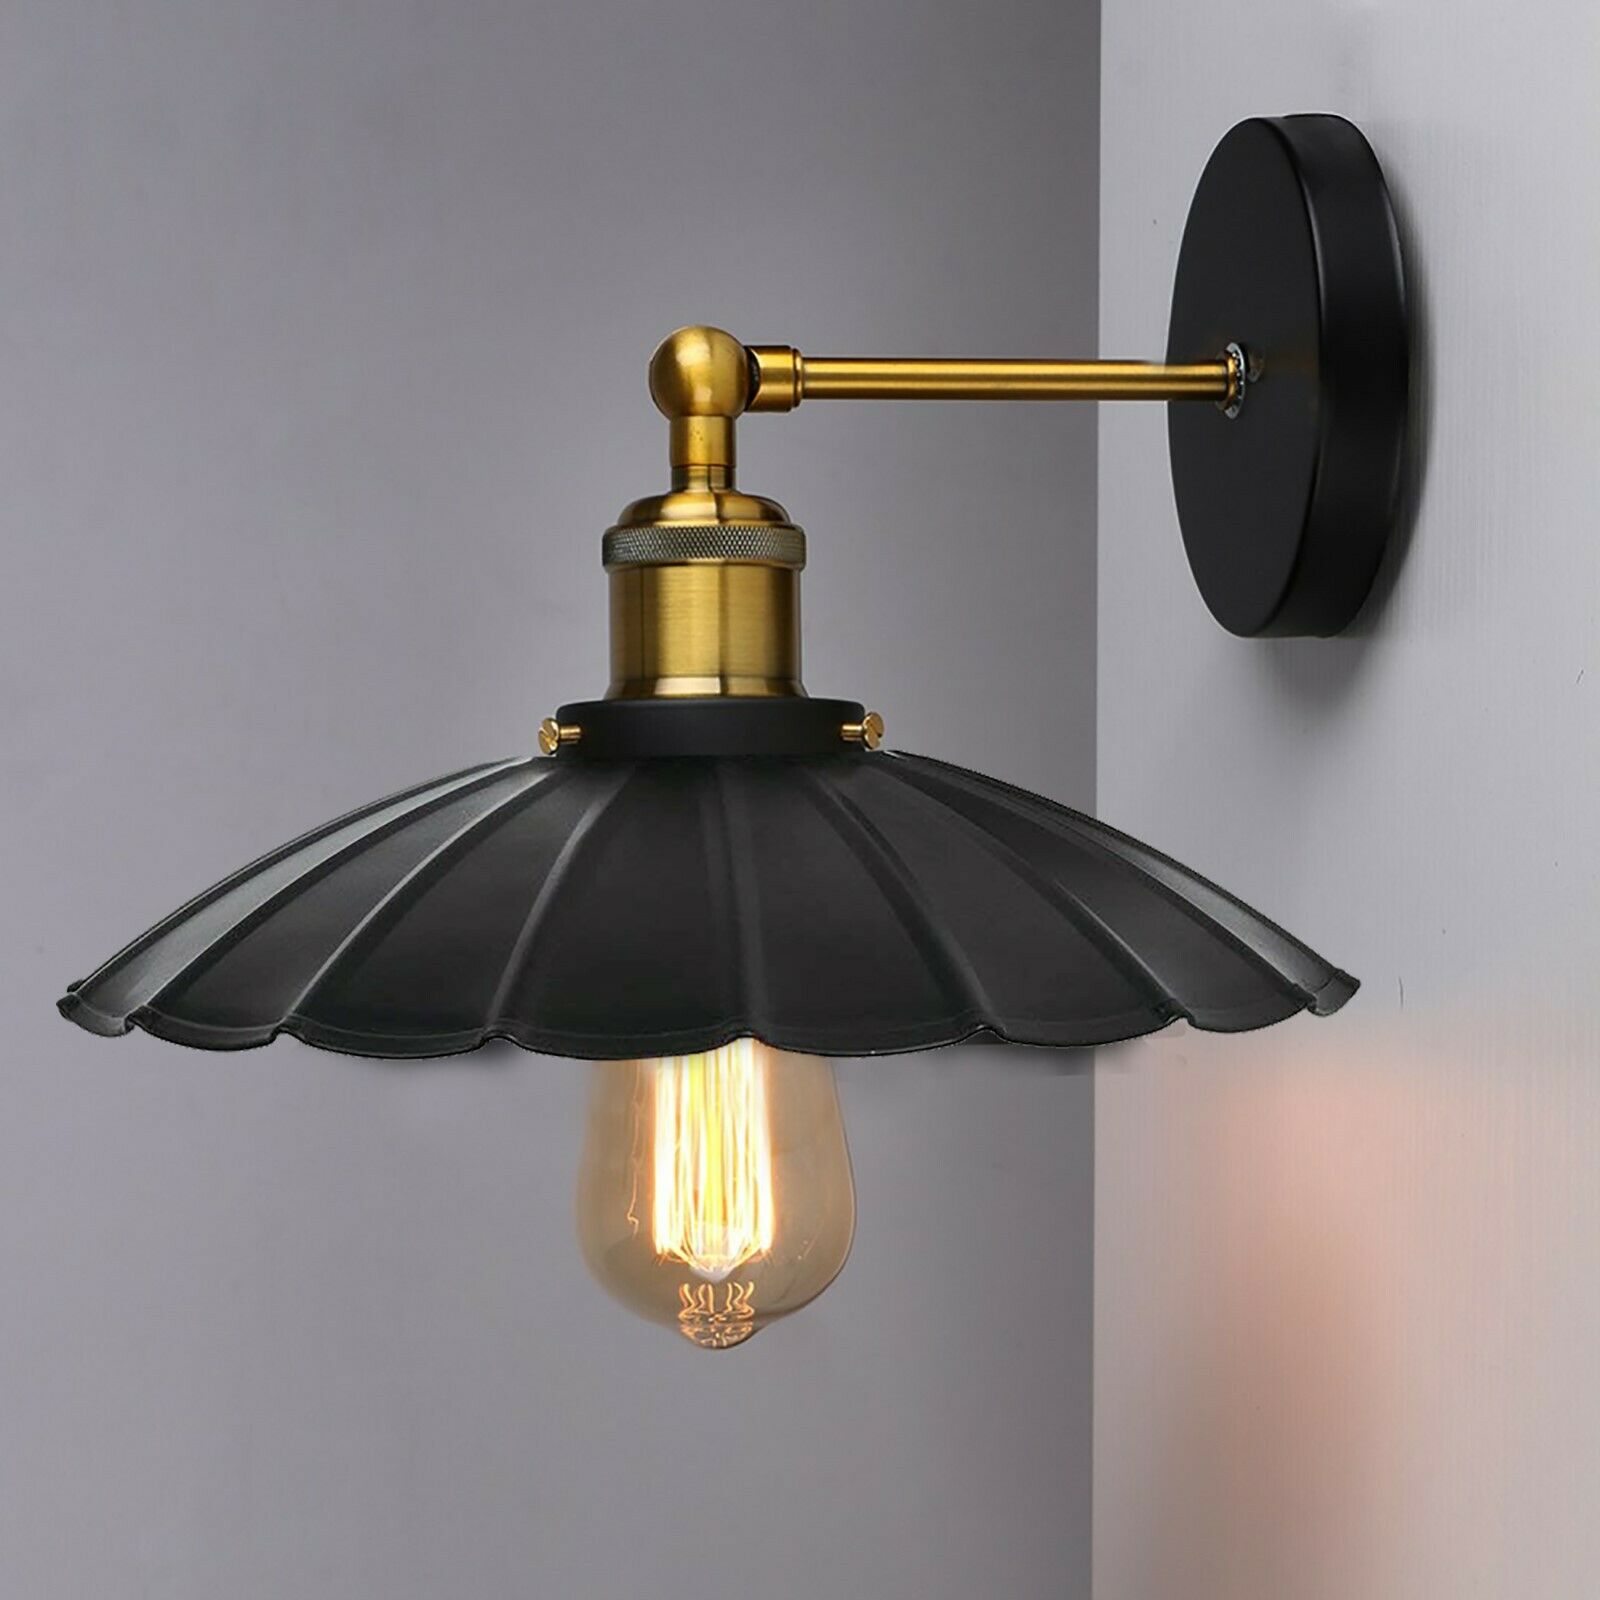 Vintage Retro Light Shade Ceiling Industrial E27 Wall Lights Sconce Lamp Fixture~2117 - LEDSone UK Ltd